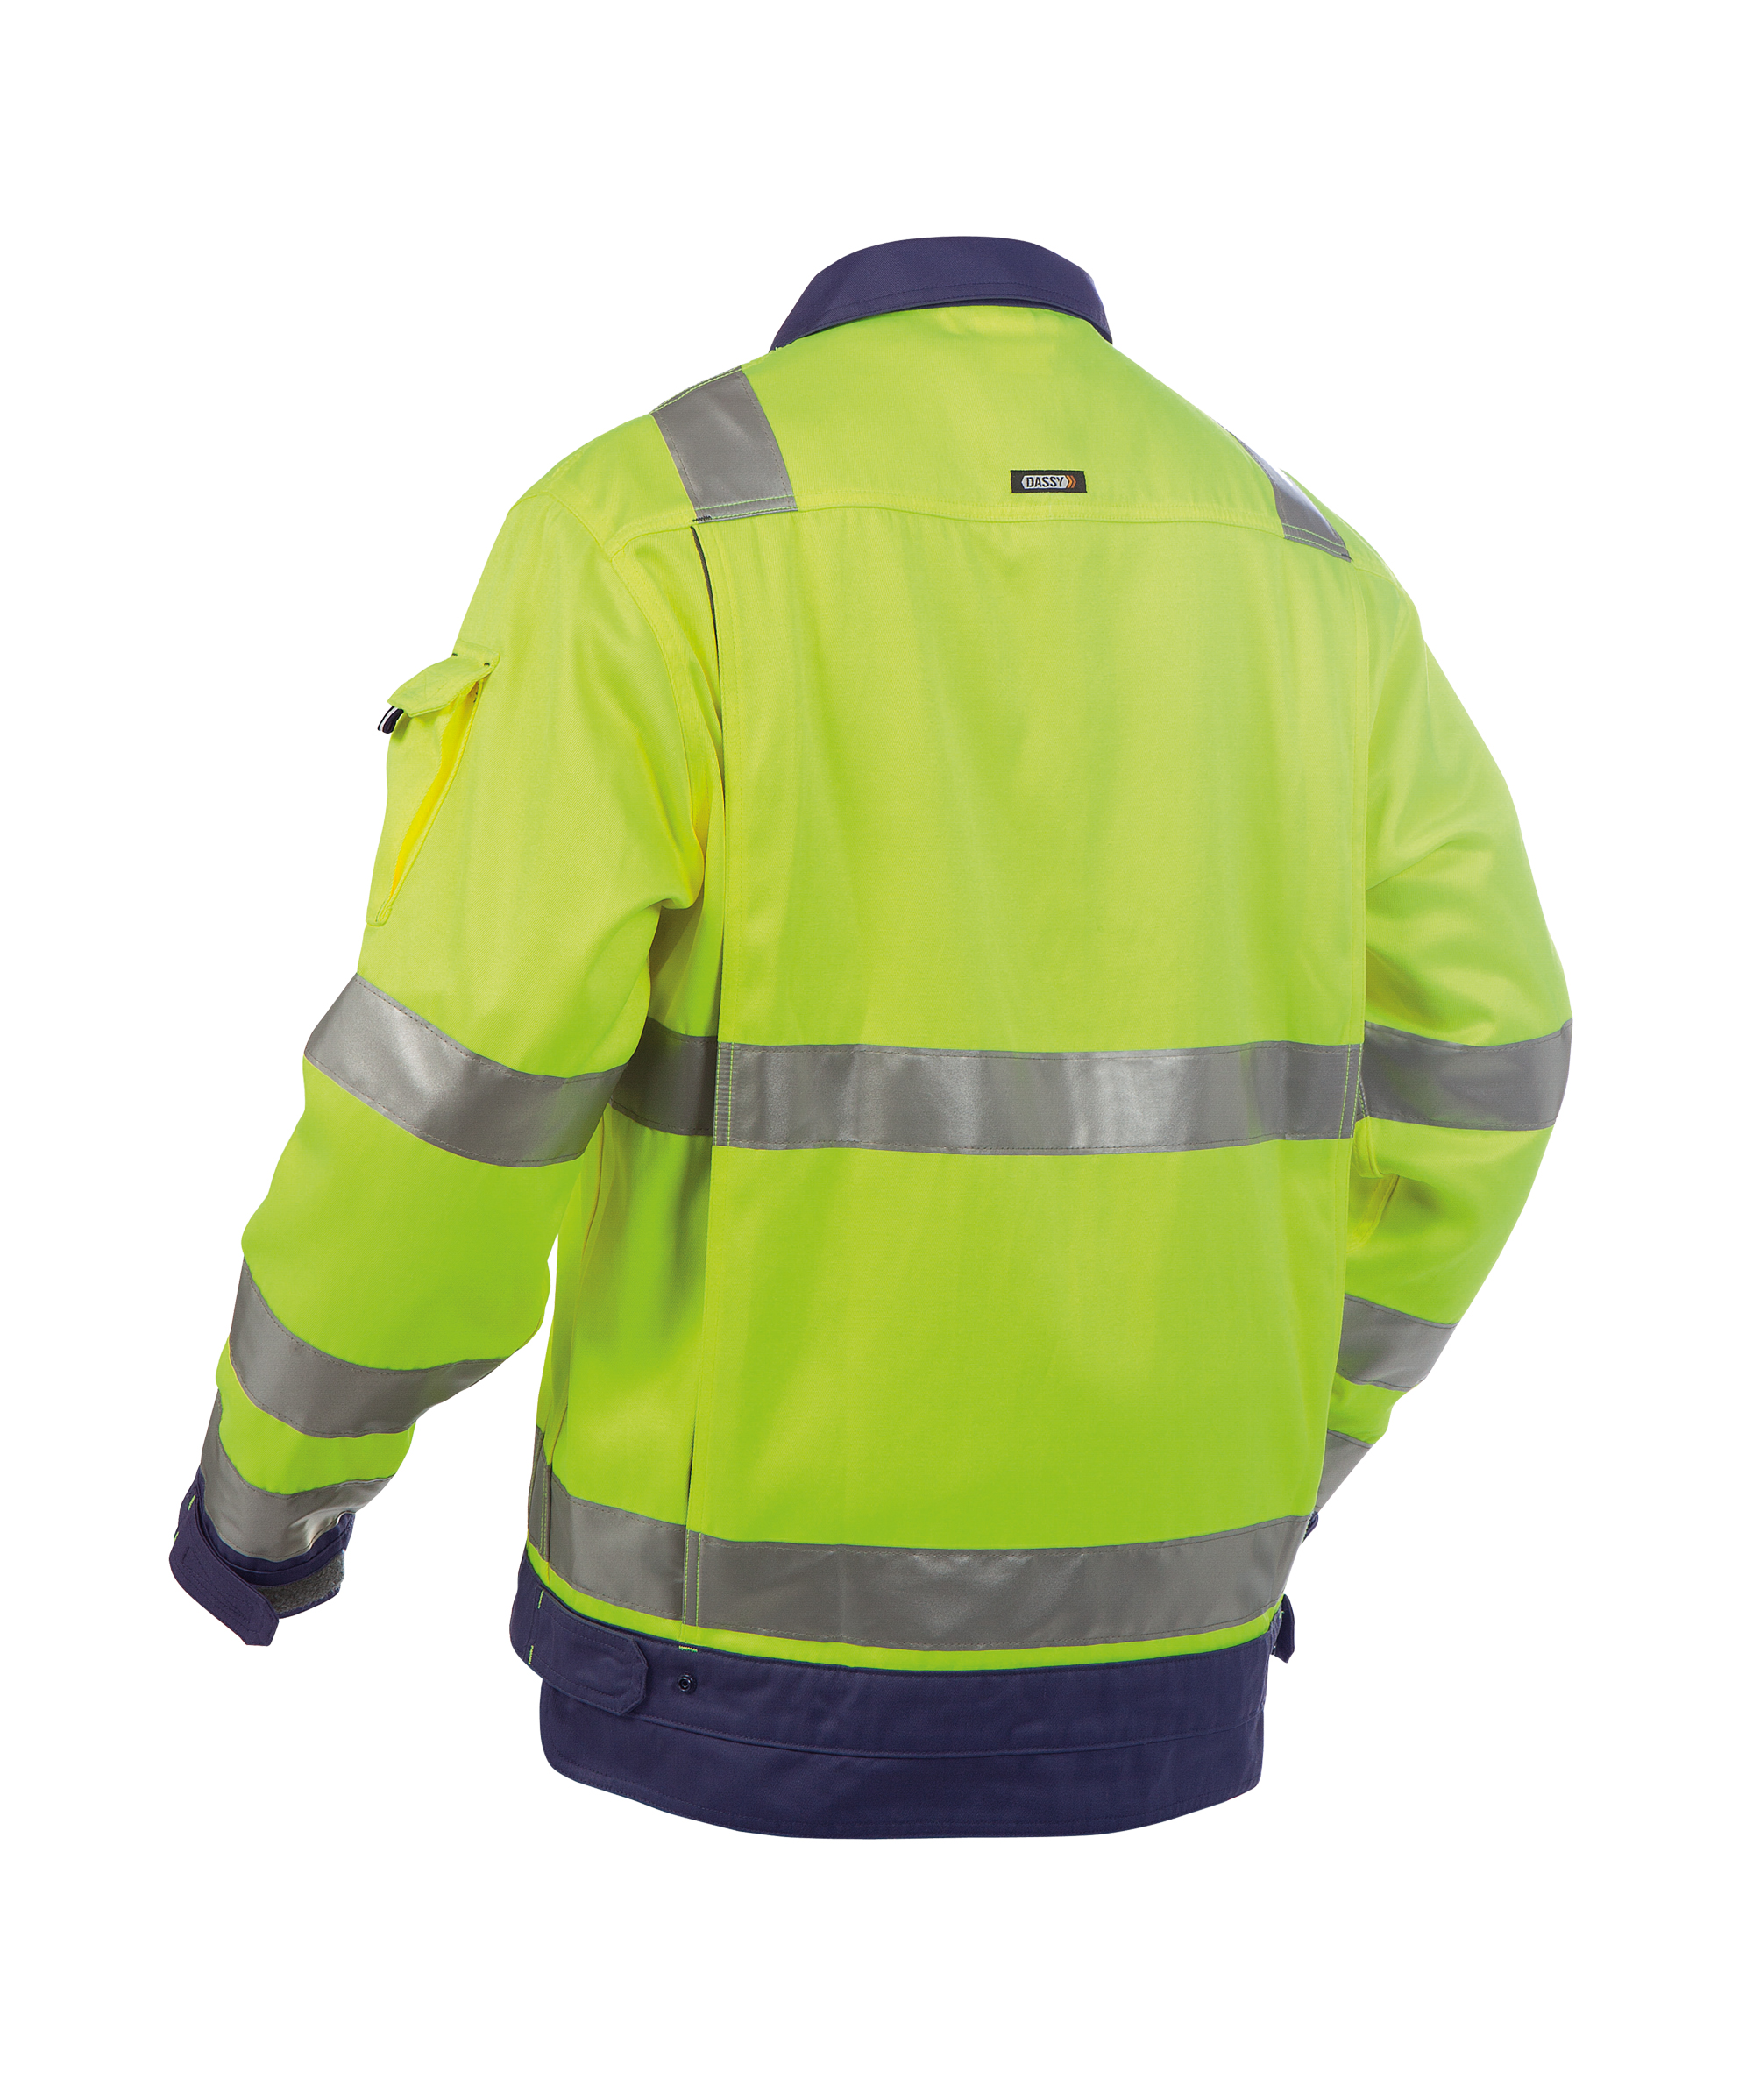 dusseldorf_high-visibility-work-jacket_fluo-yellow-navy_back.jpg